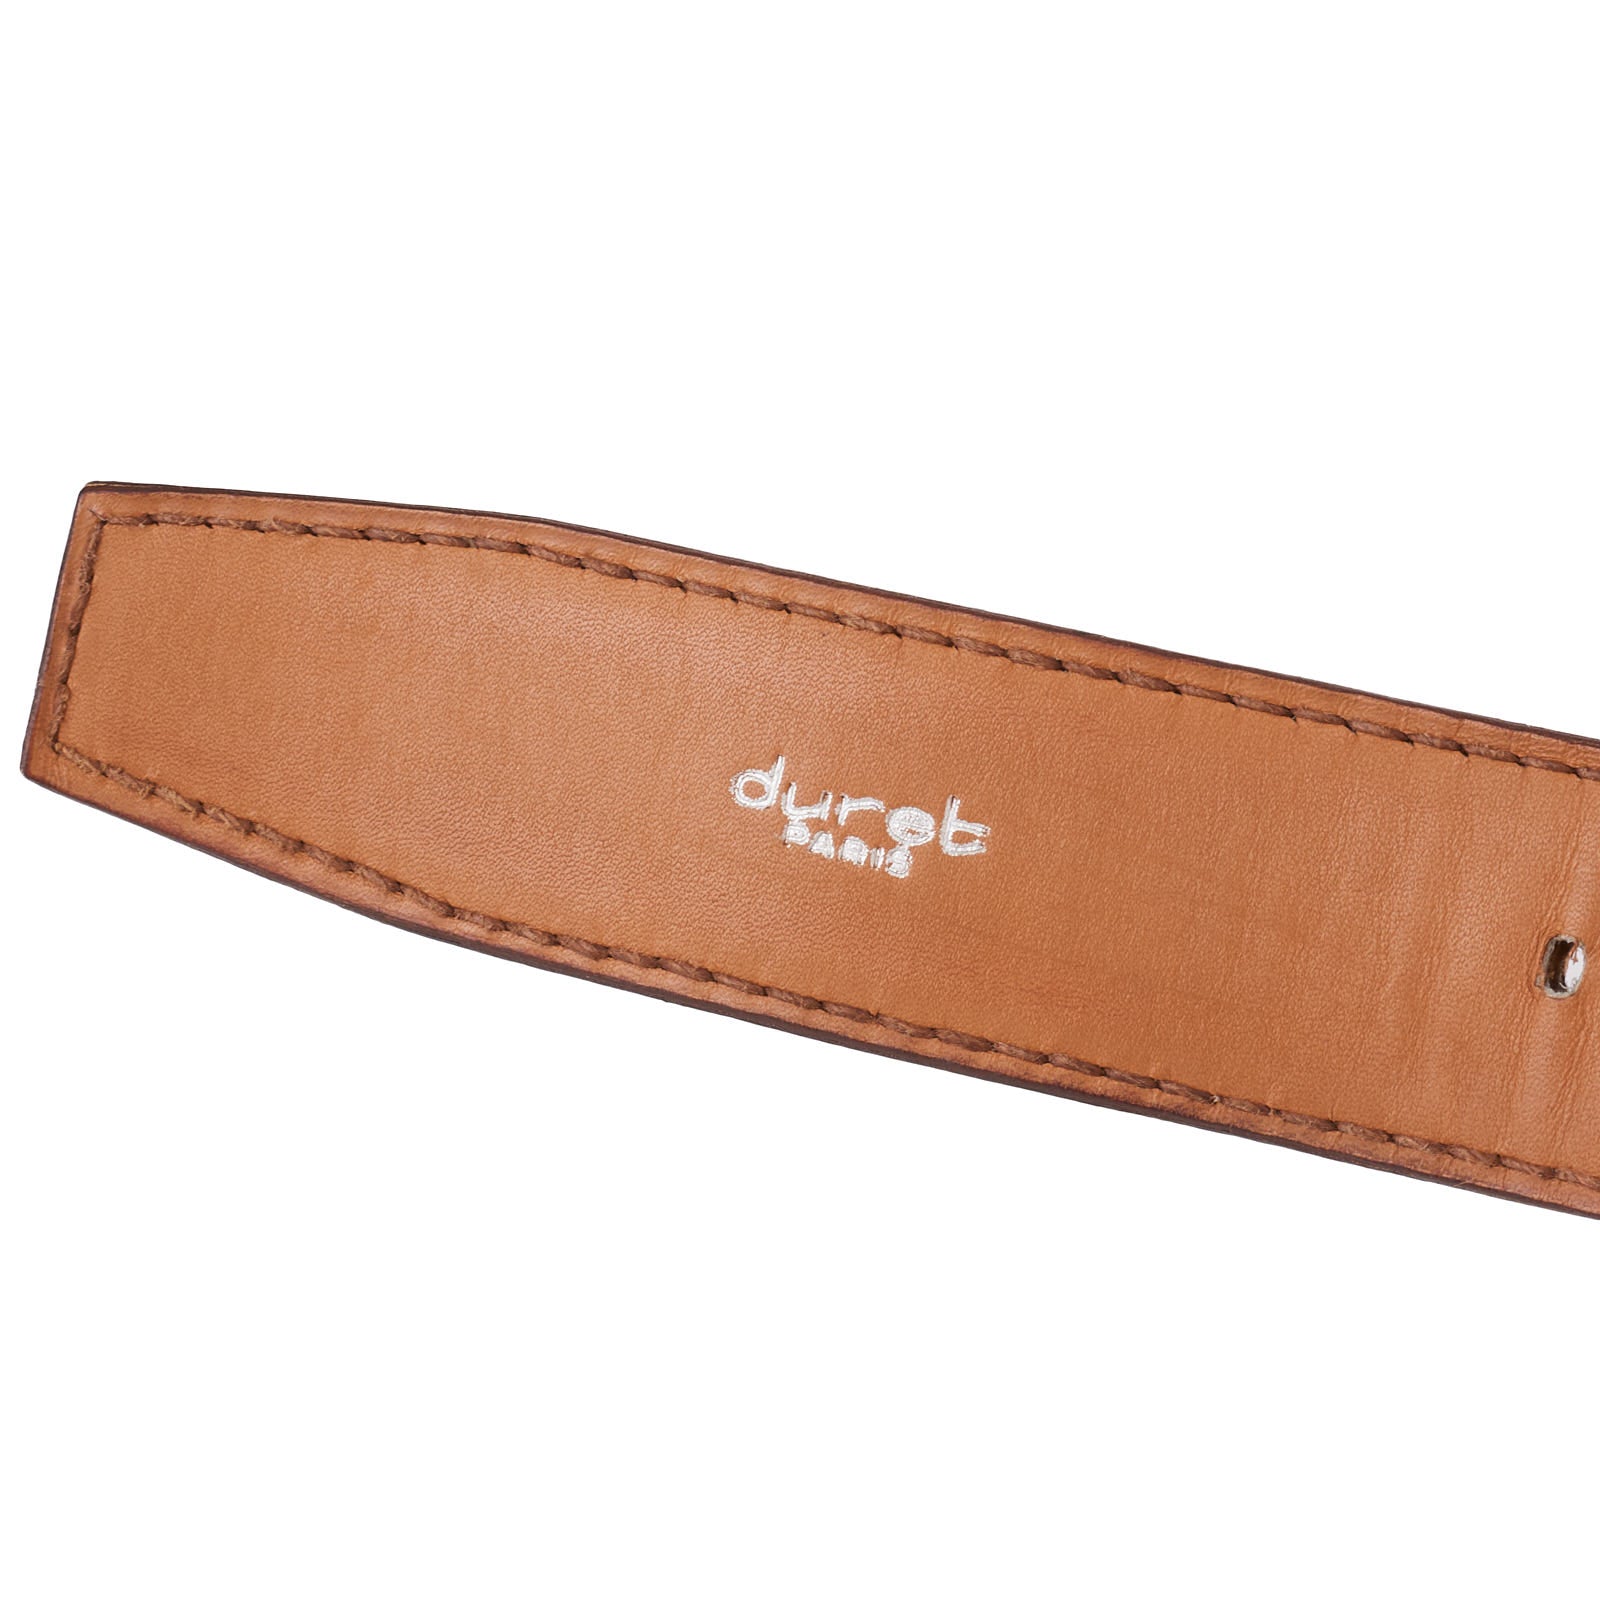 DURET Paris Chestnut Suede Calf Leather Belt with Silver Alpha Buckle 37" 95cm DURET